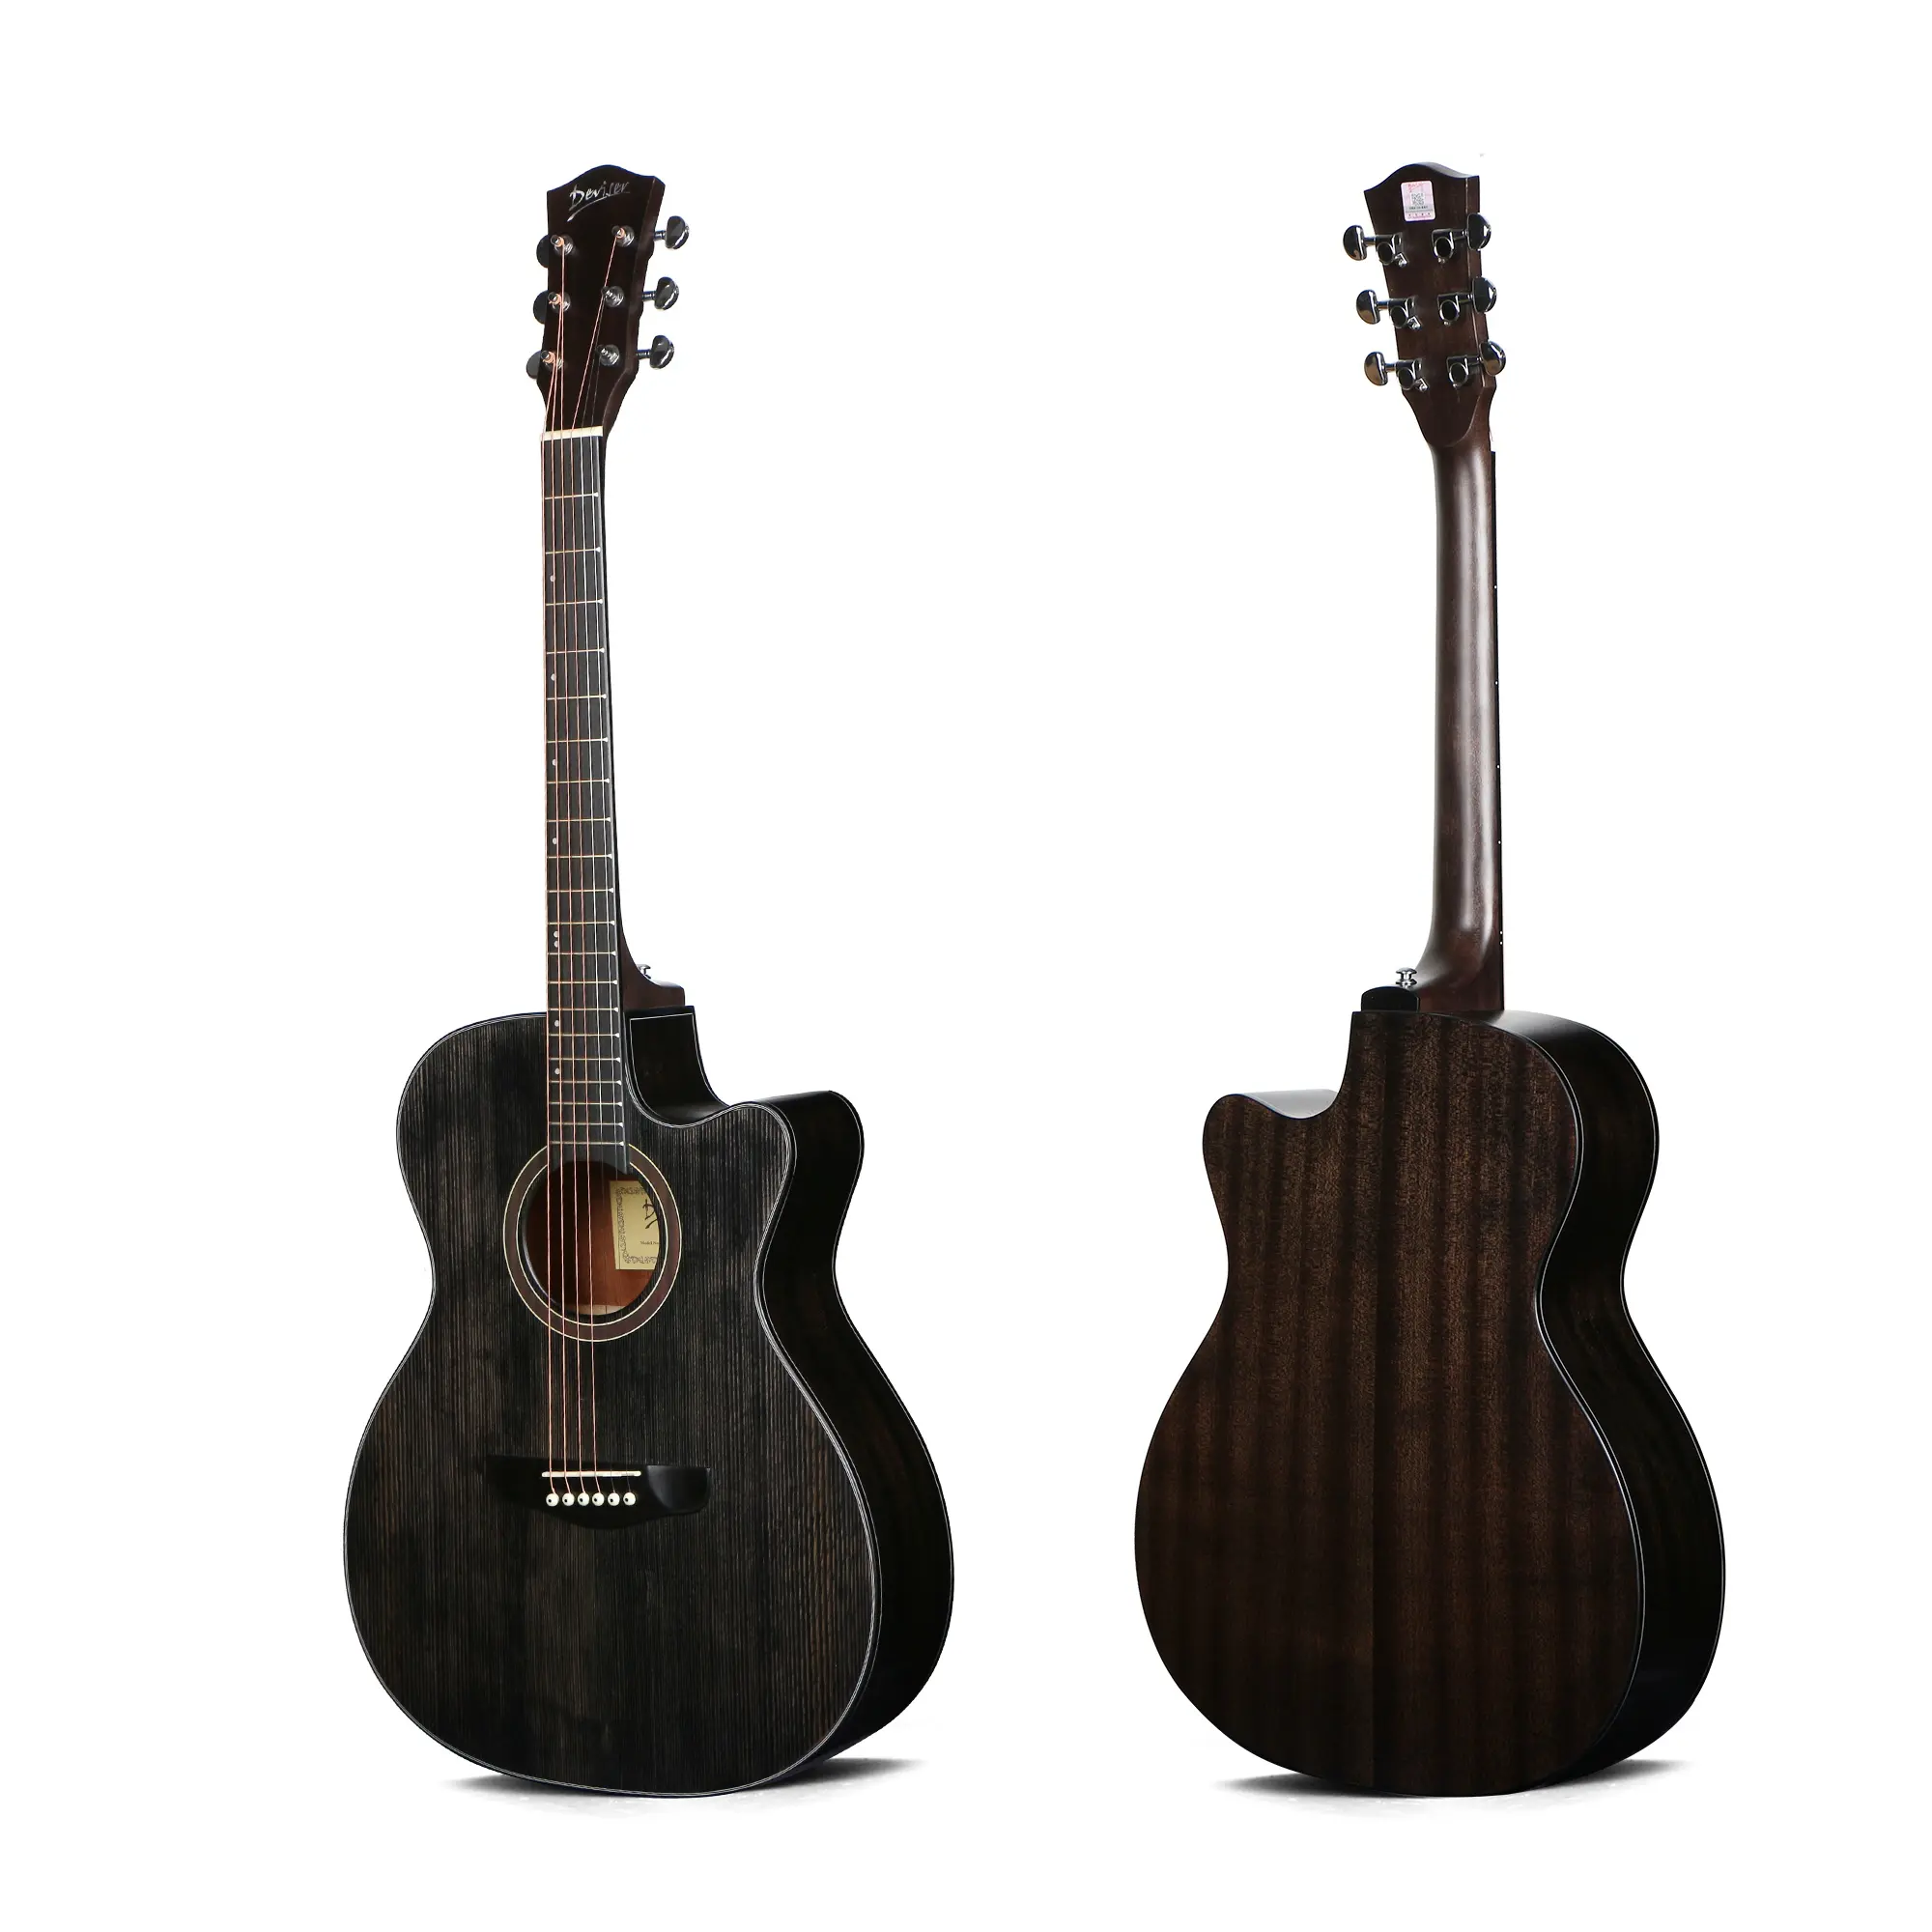 Deviser guitar manufacture guitar for sale black acoustic 40 inch high quality cheap guitarra OEM